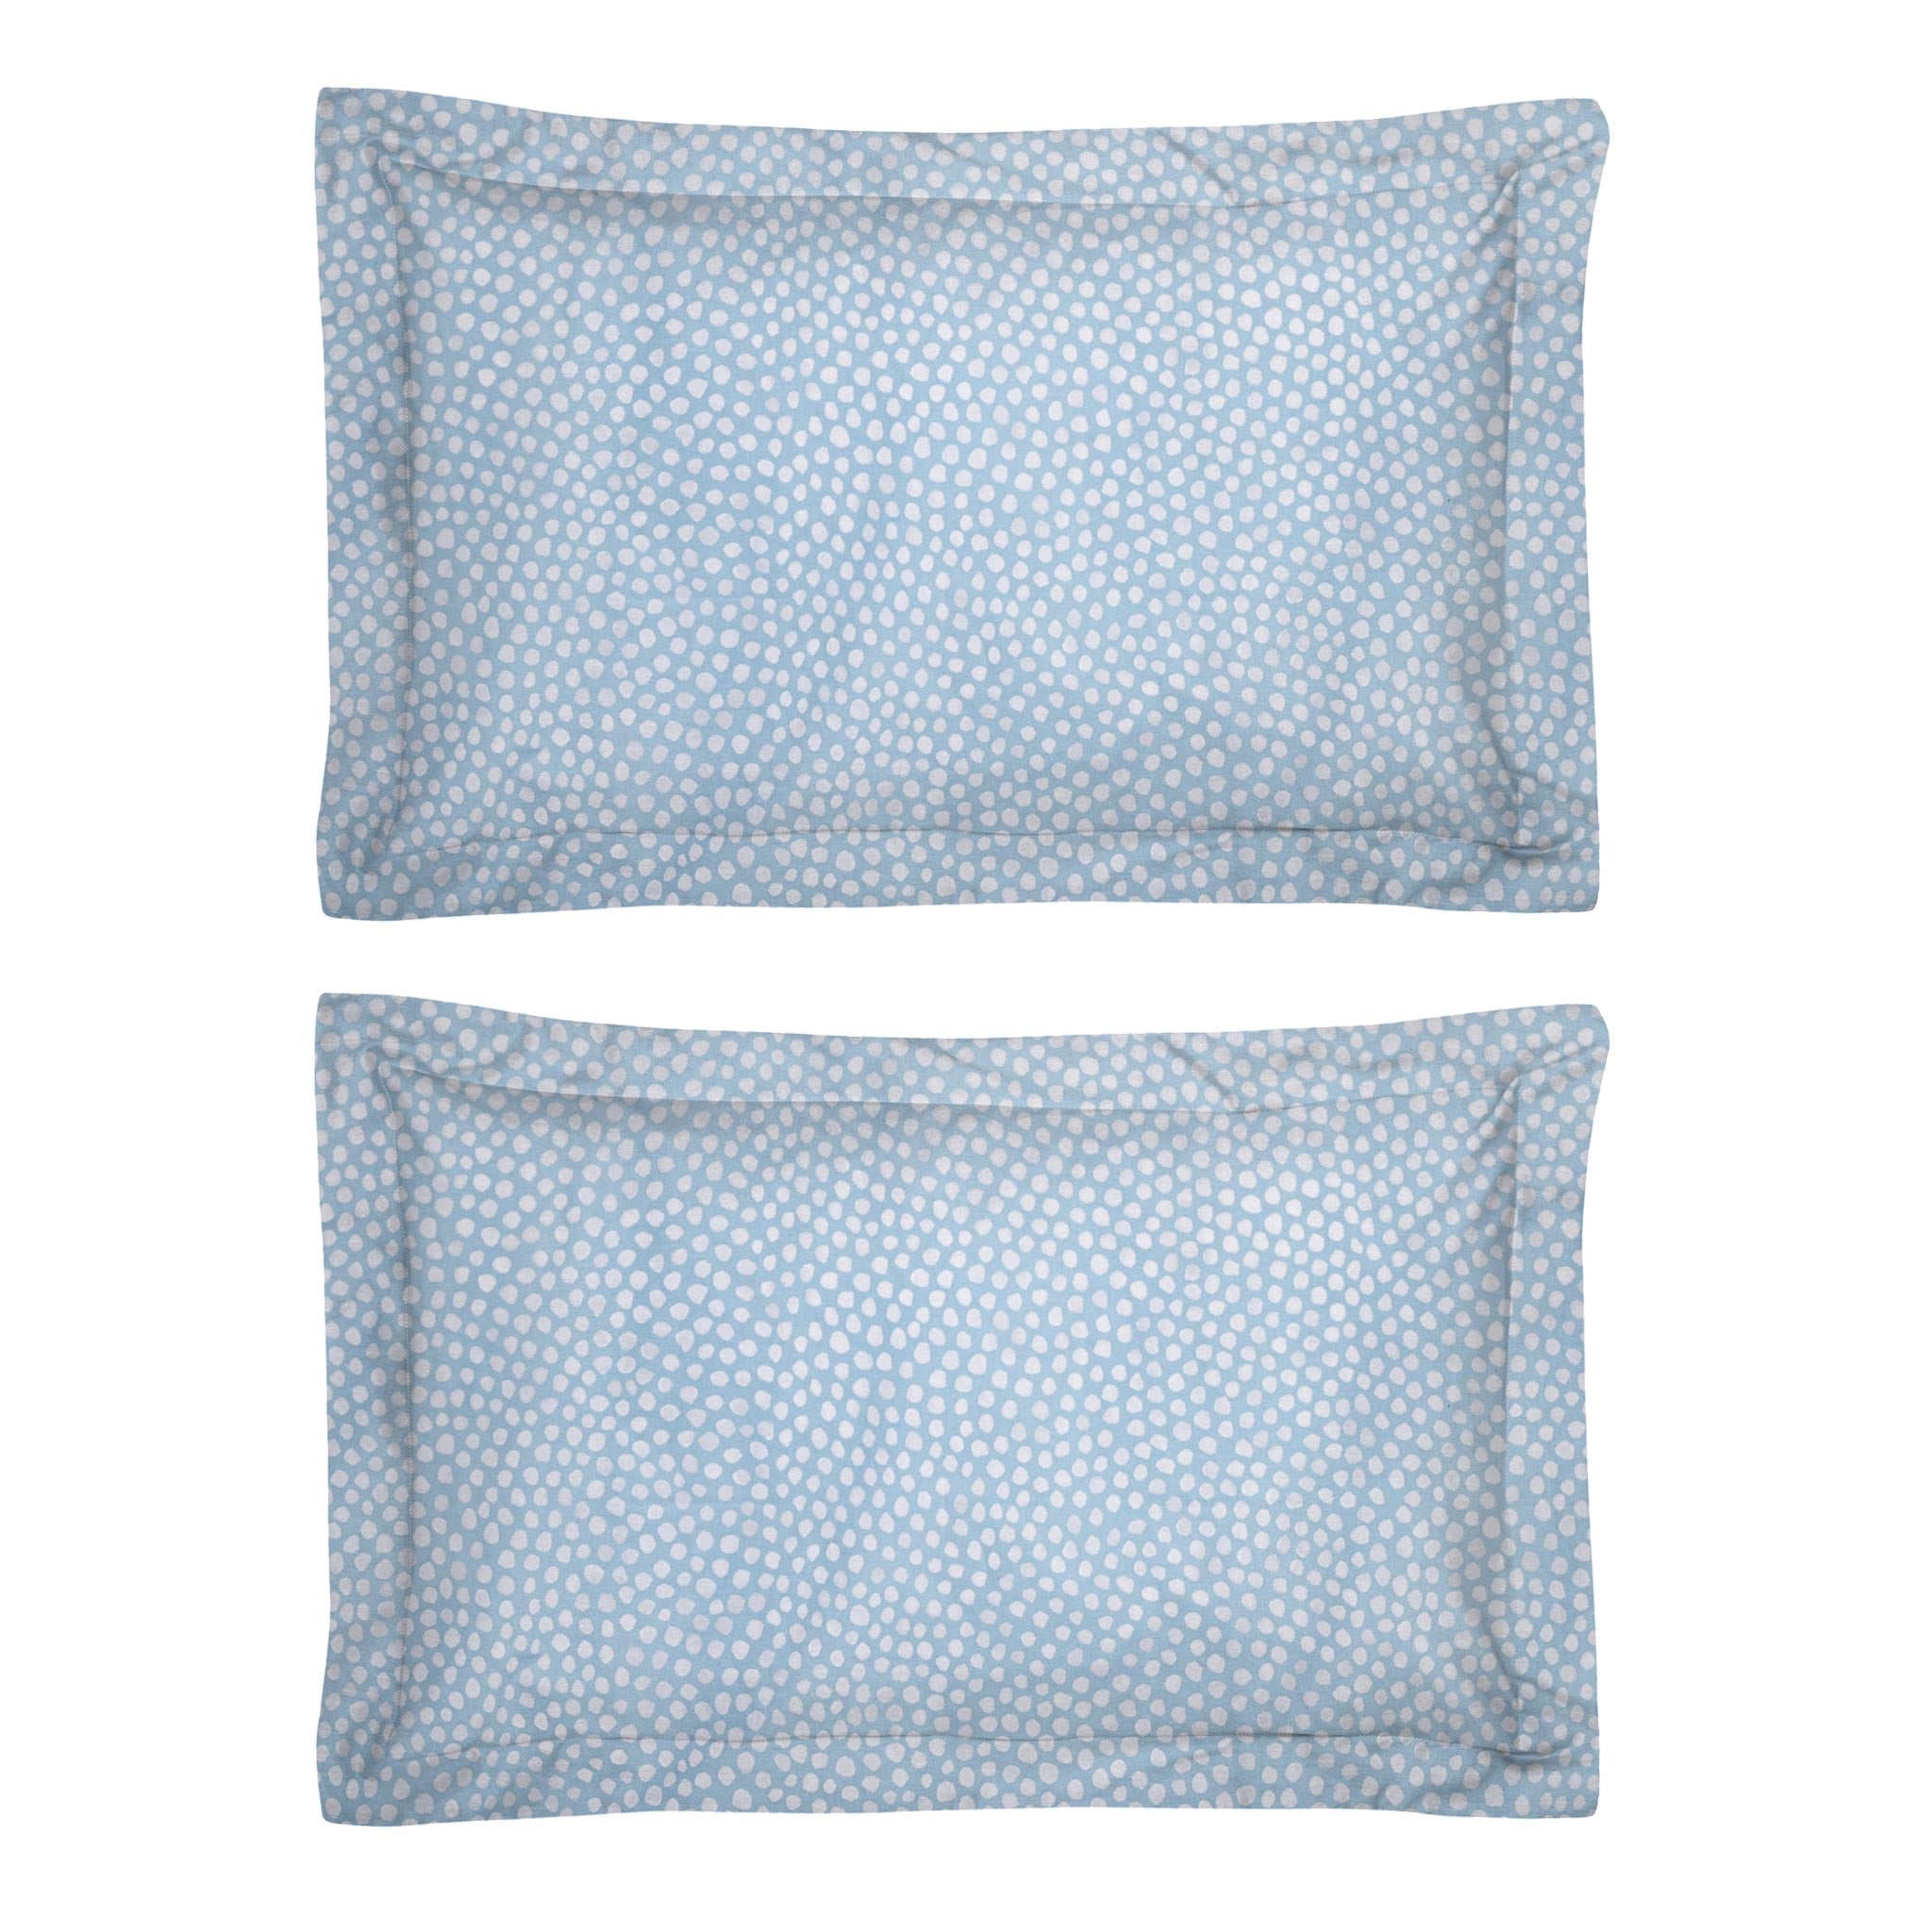 Aqua Blue Polka Dot 100% Cotton Percale 200TC Oxford Pillowcase